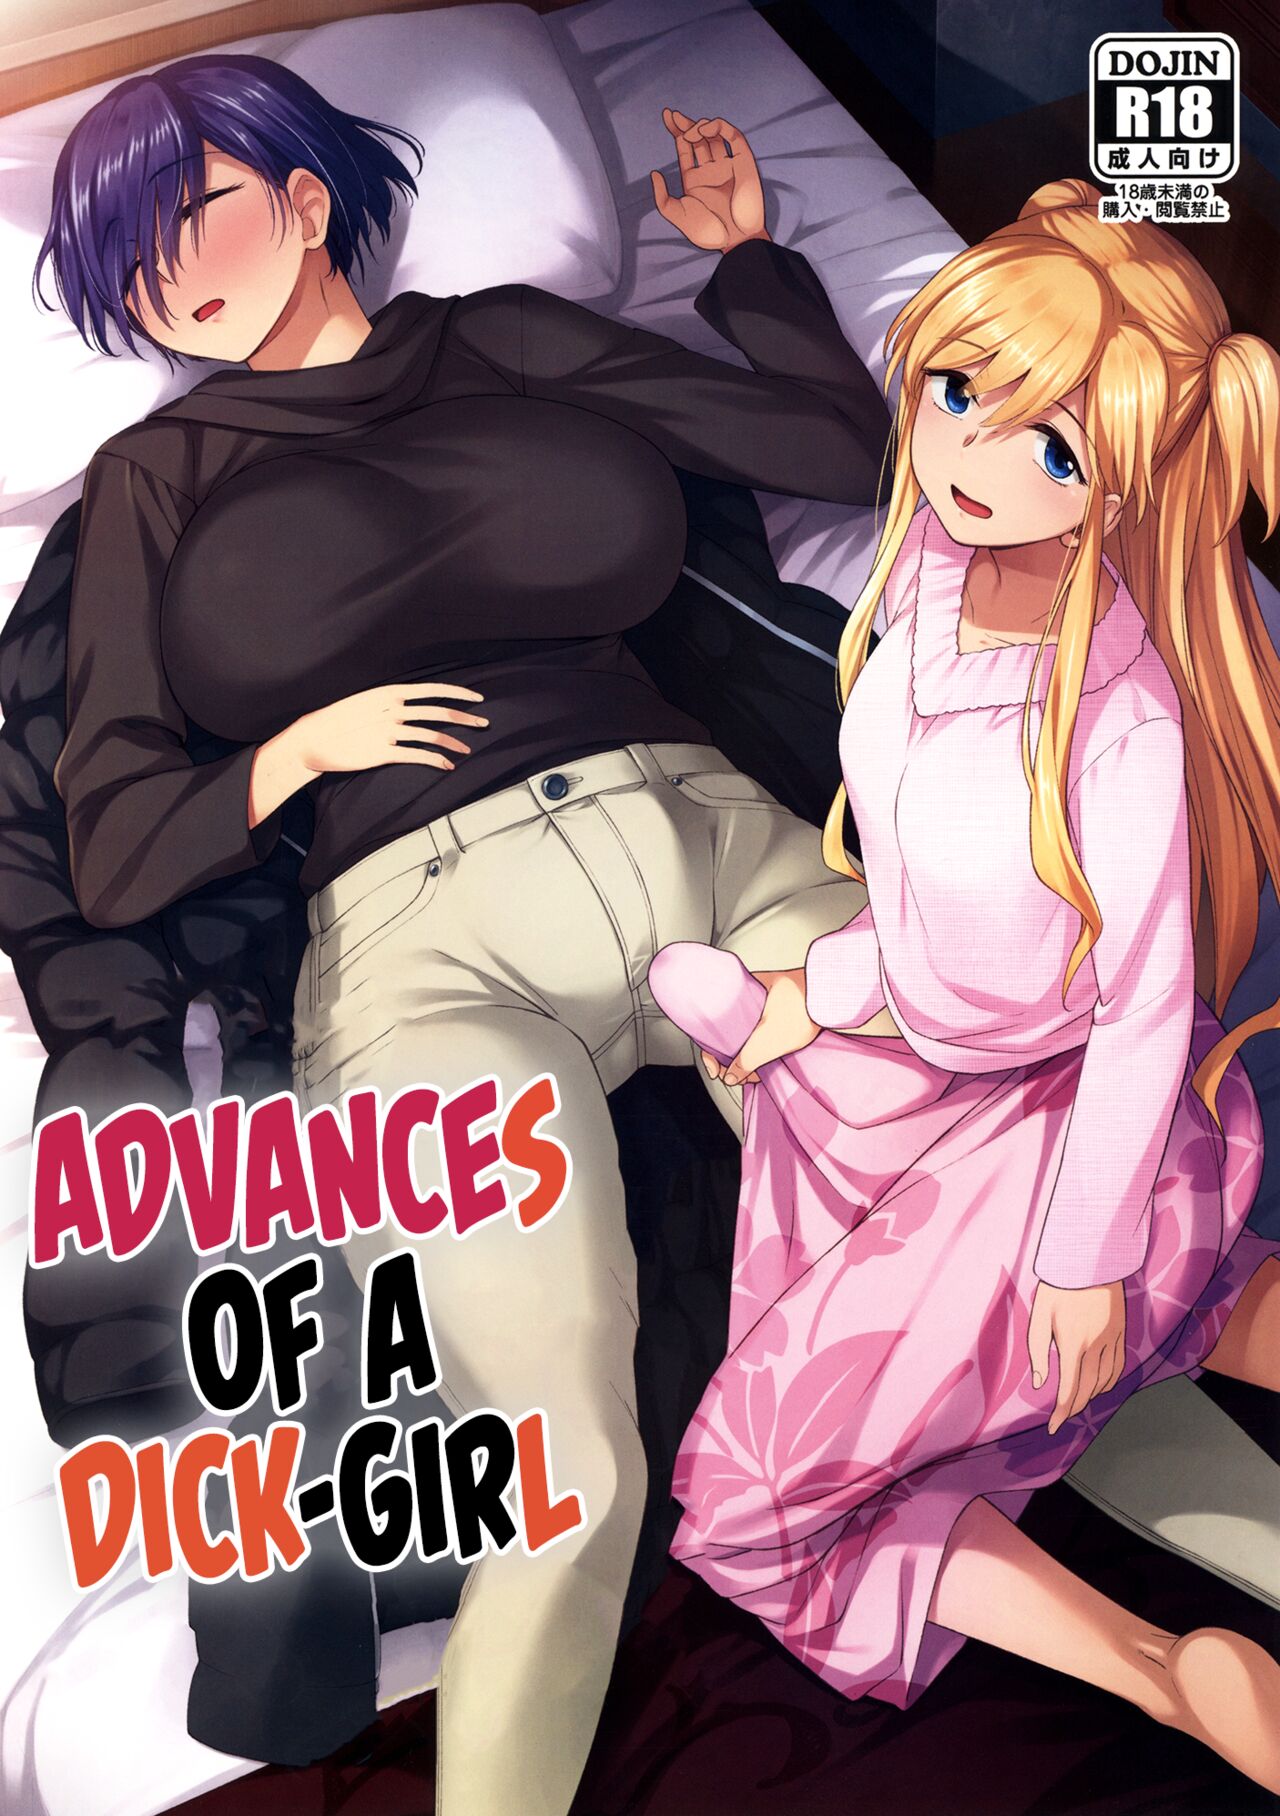 Girls with dicks anime